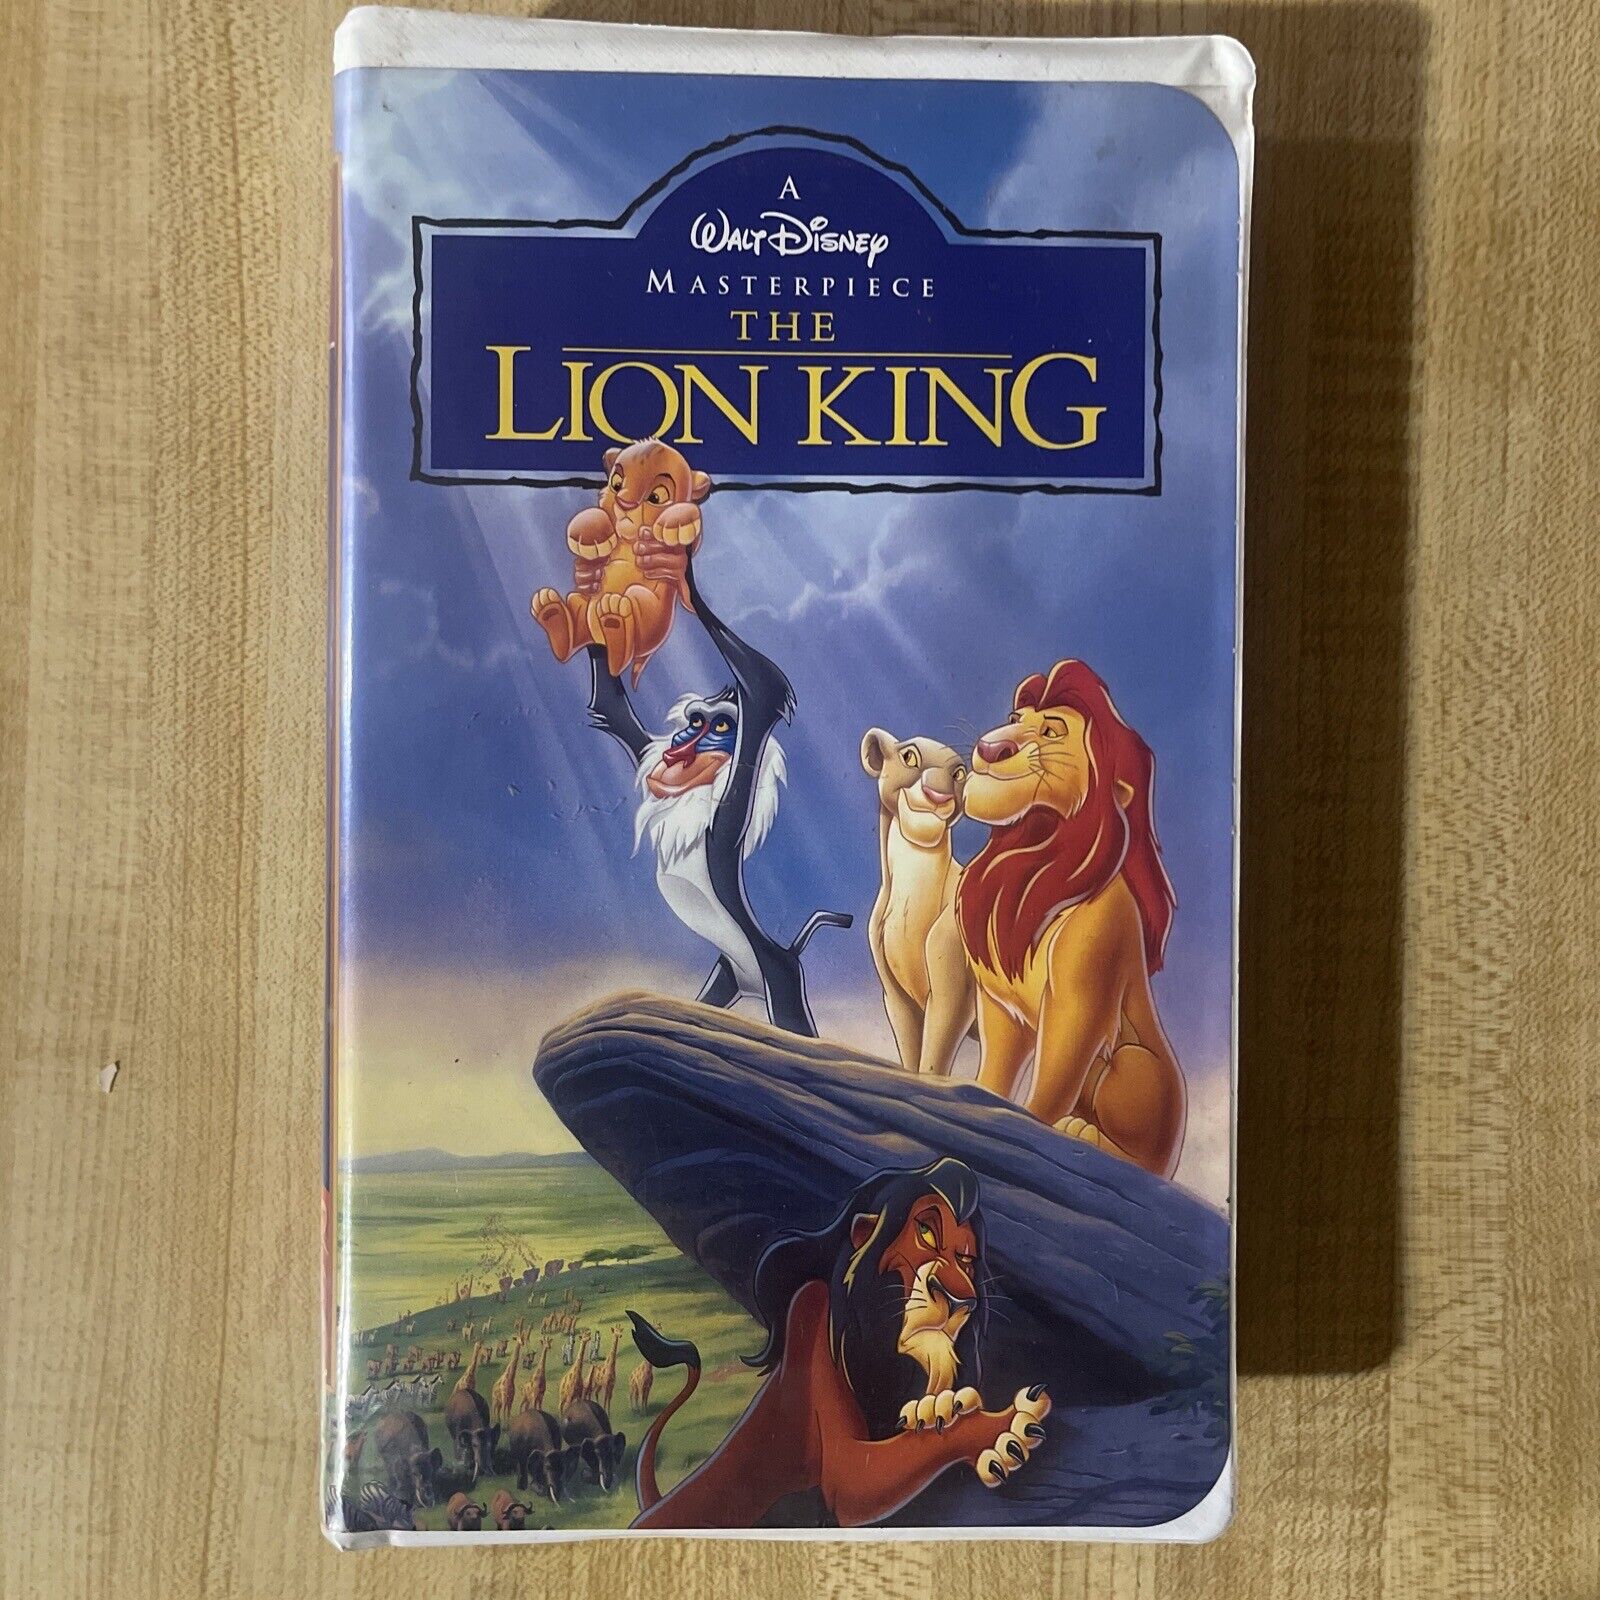 ORIGINAL RARE THE LION KING VHS (WALT DISNEY MASTERPIECE COLLECTION) 1995